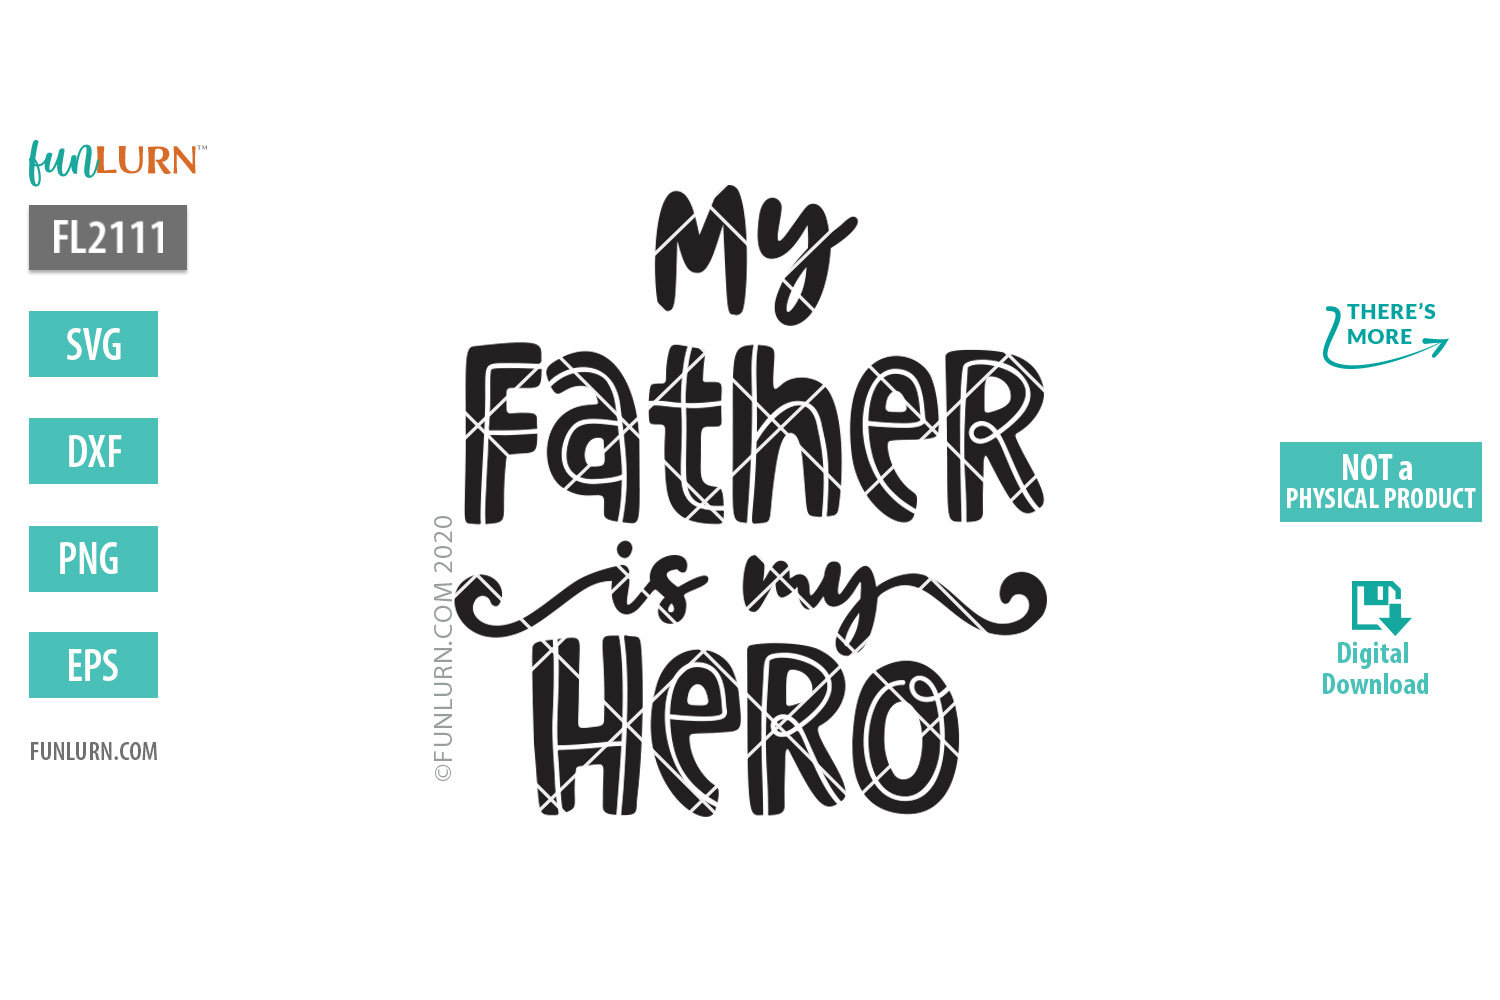 Download My Father my hero SVG - FunLurn